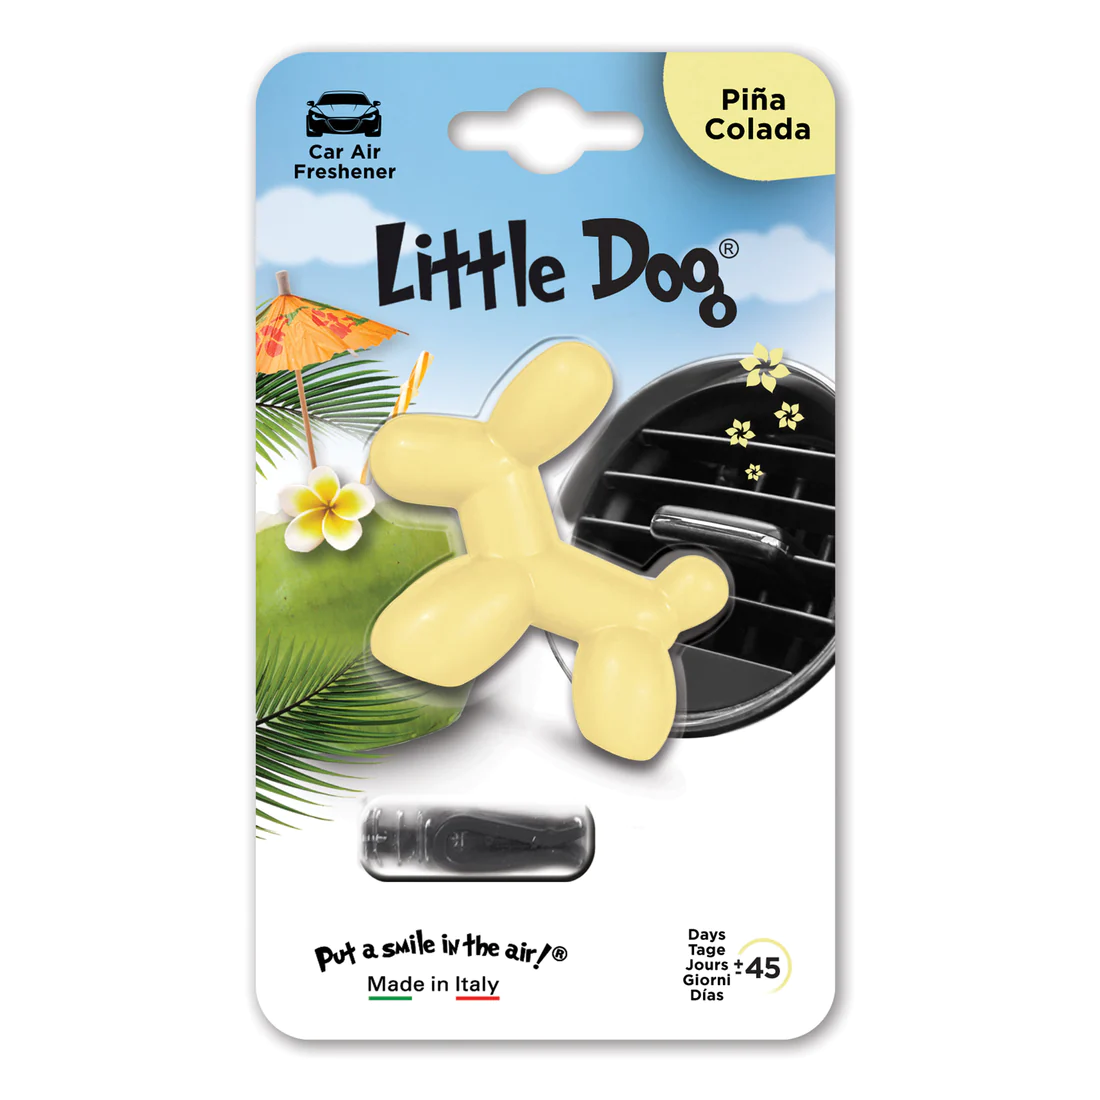 Little Joe Little Dog Pina Colada (Пина колада)